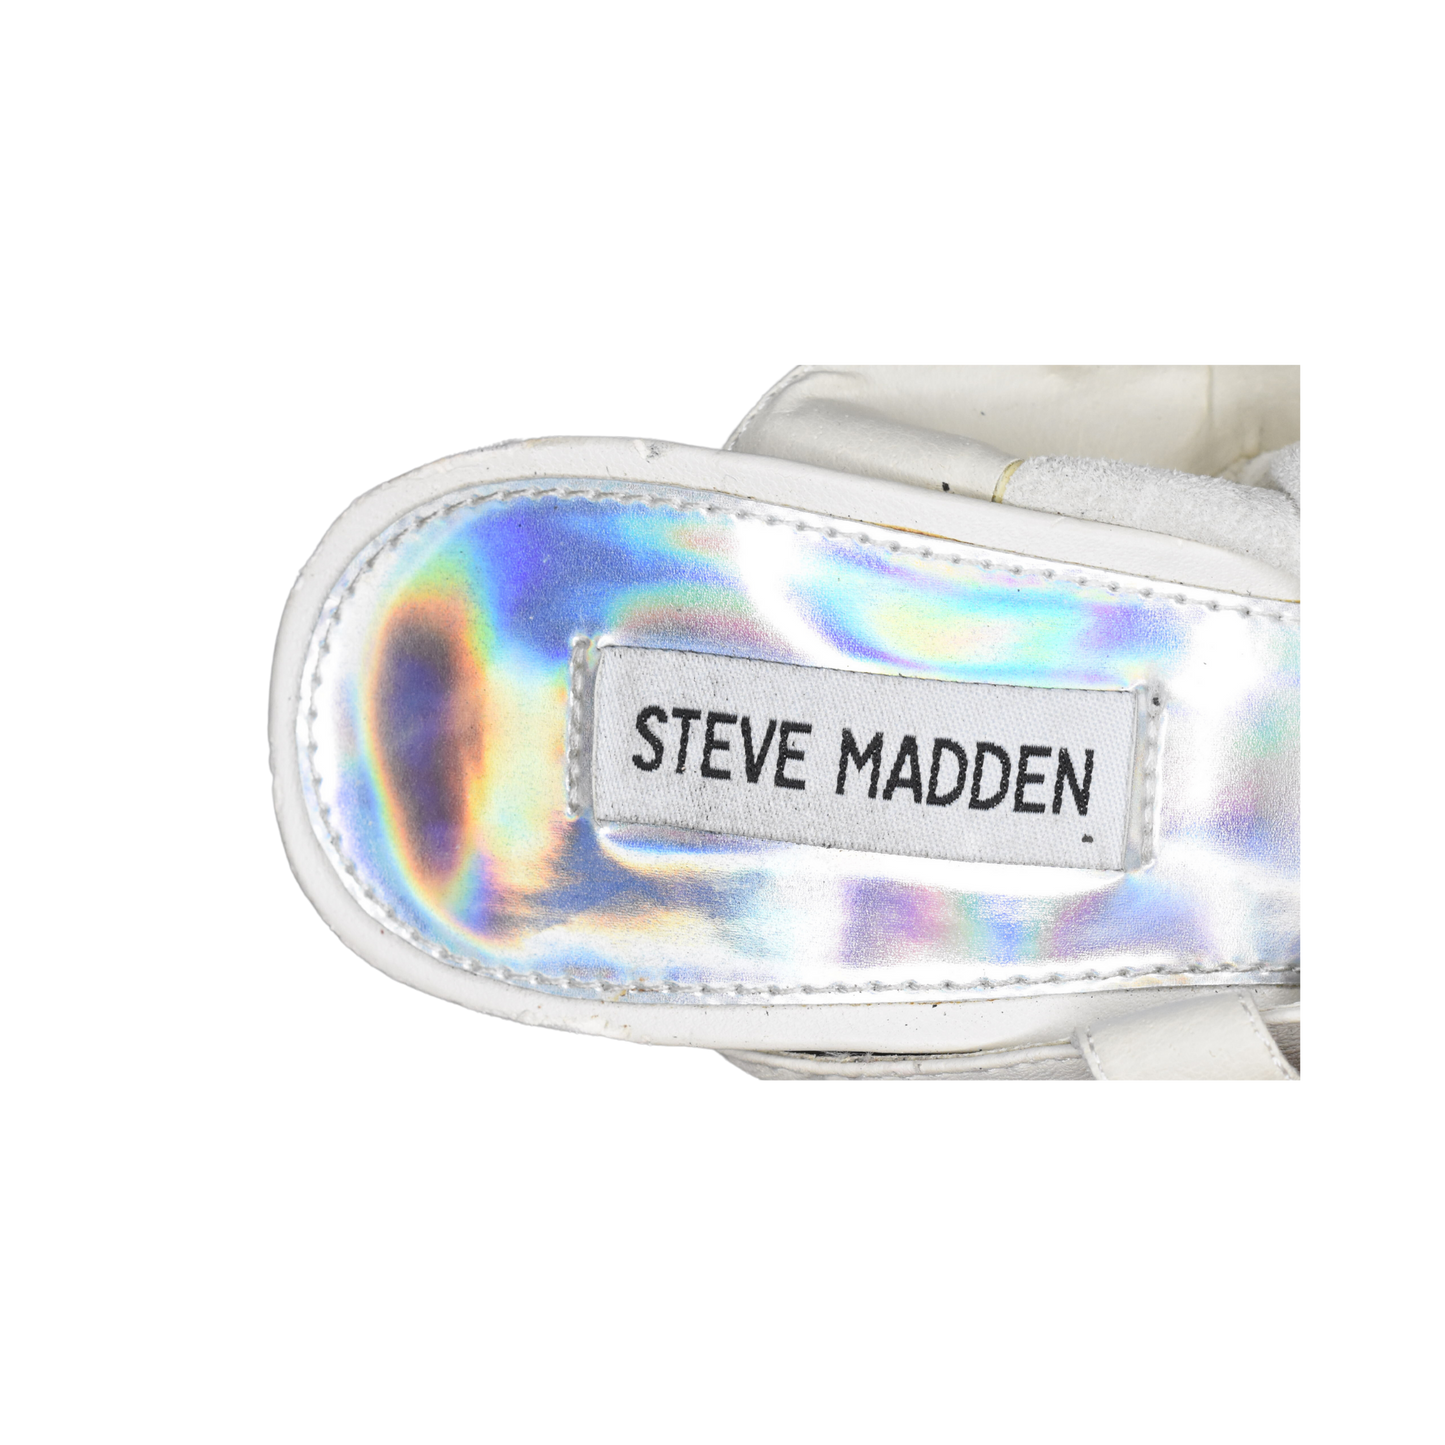 Steve Madden Open-Toe High Heels White Size 8M SKU 000249-4